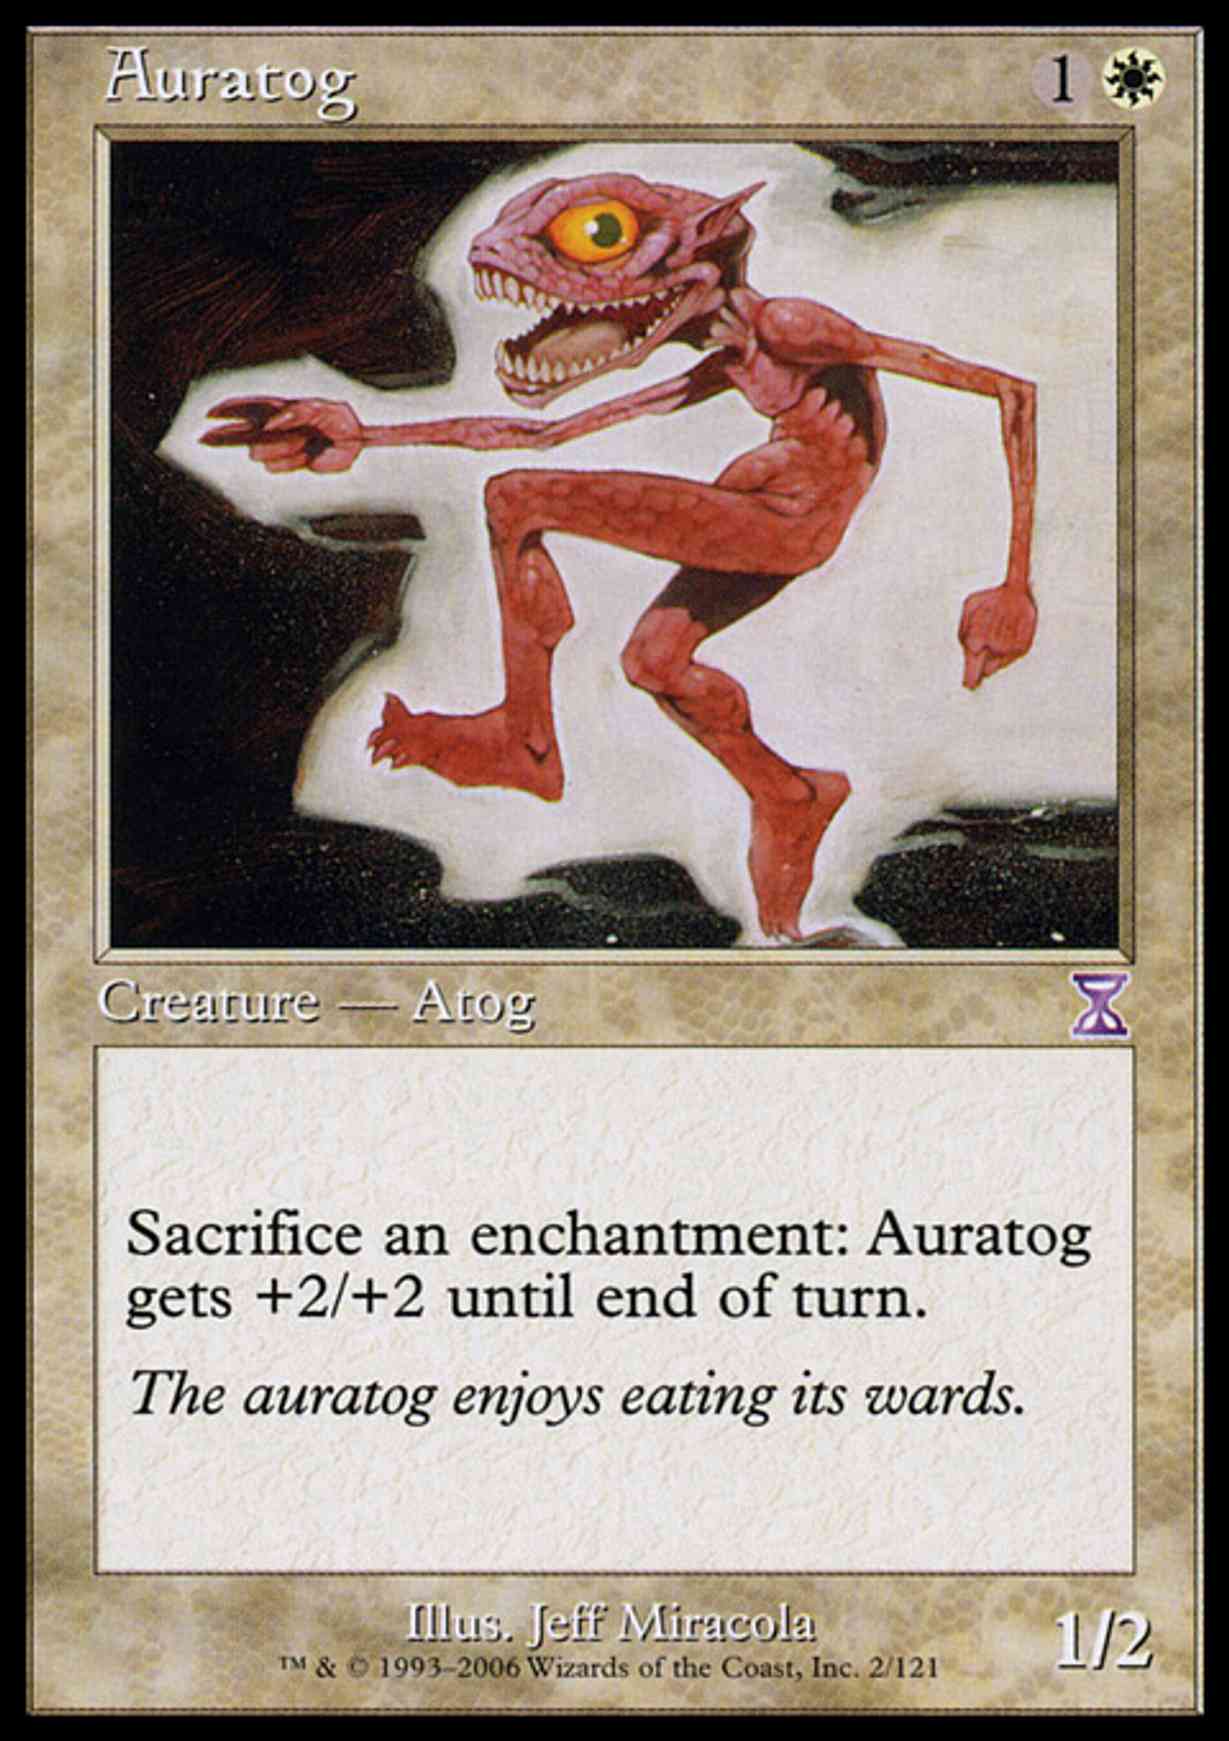 Auratog magic card front